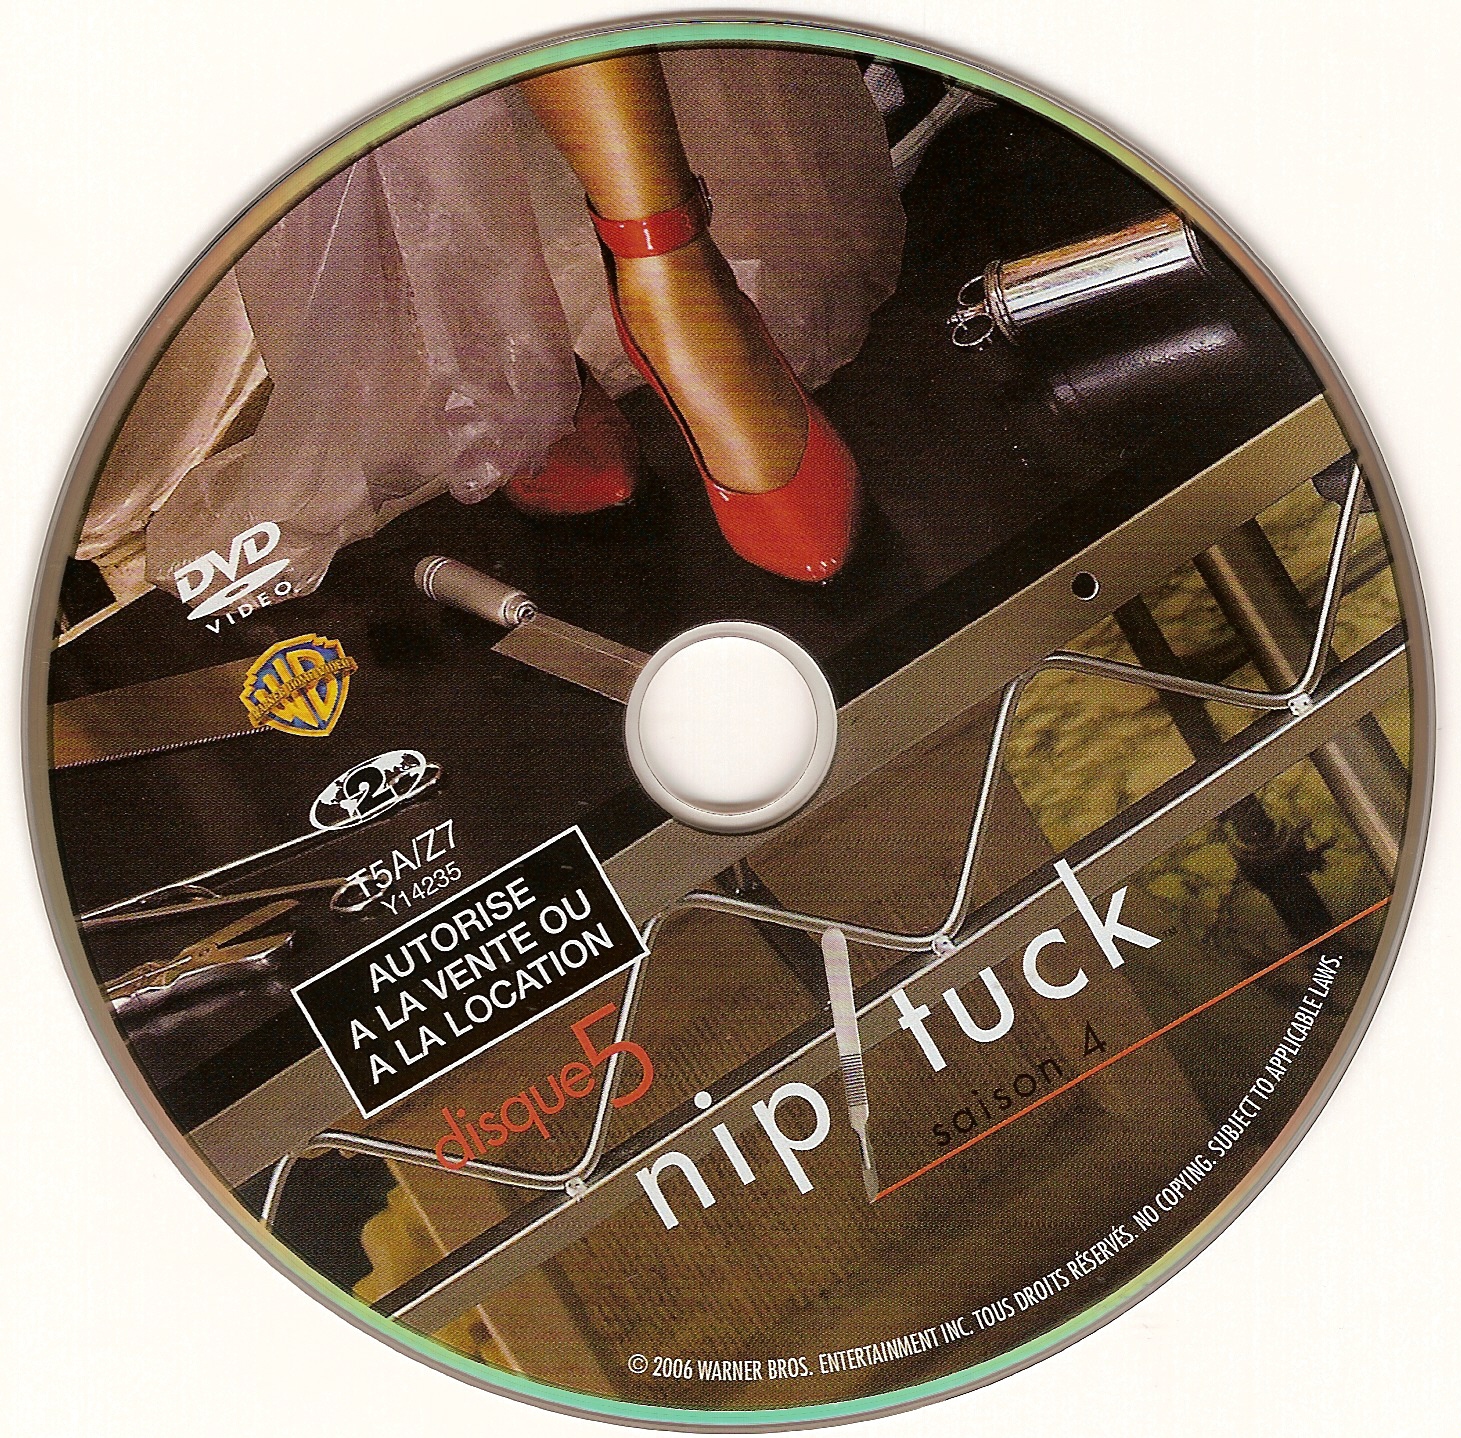 Nip-Tuck saison 4 DVD 5